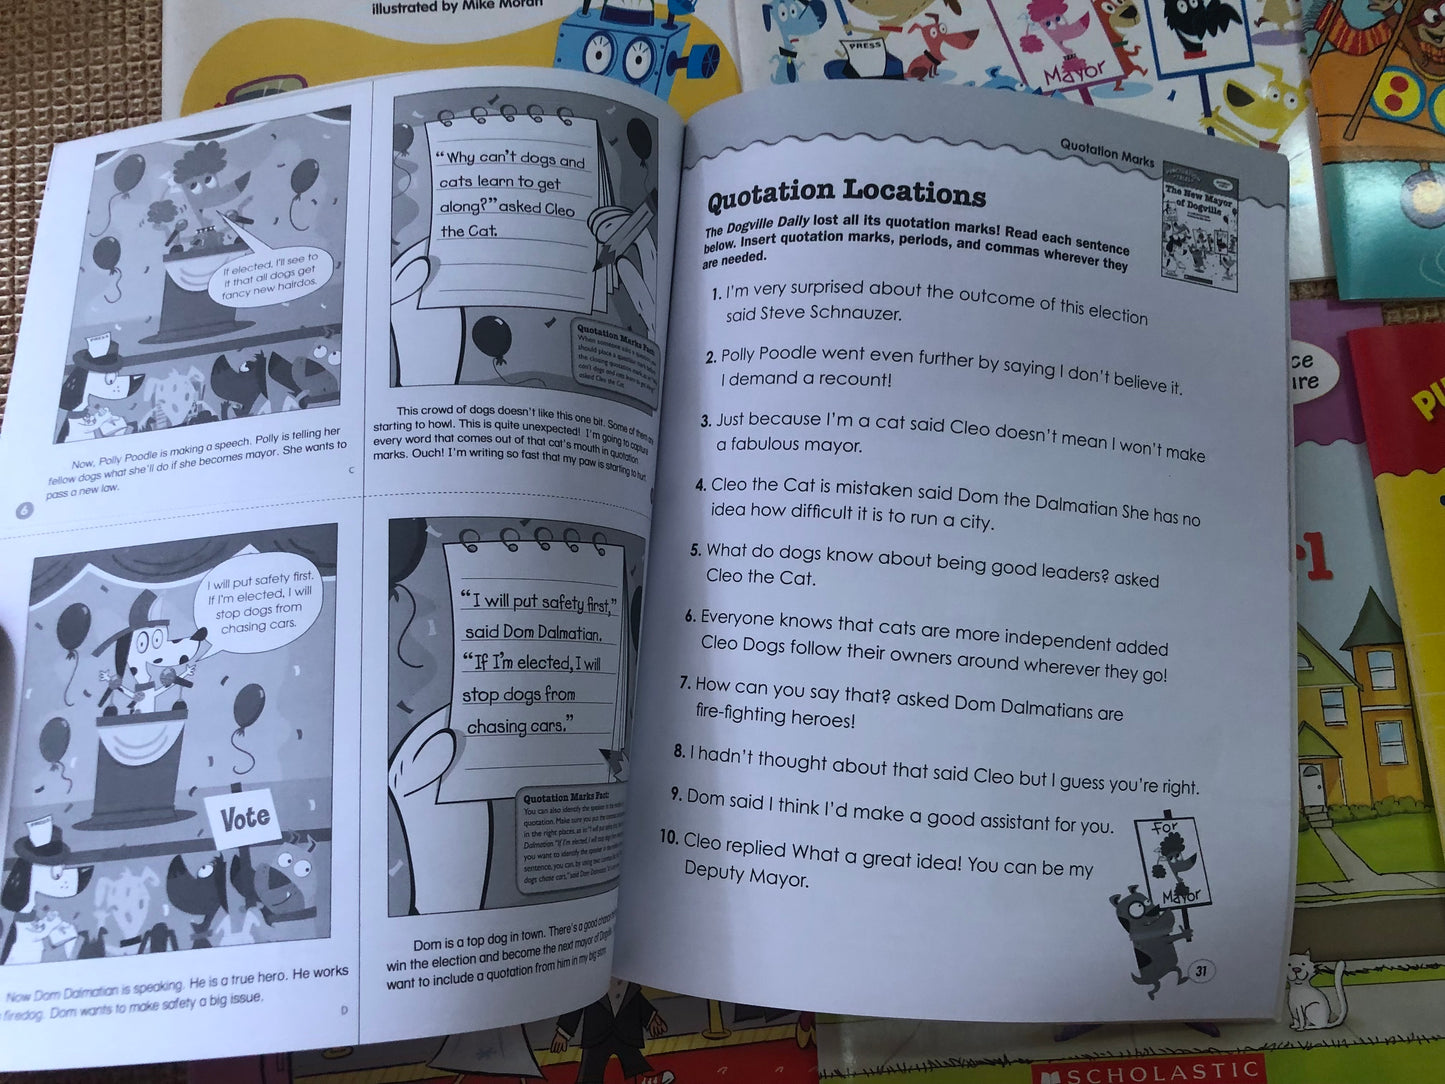 Scholastic Punctuation Tales Box Set